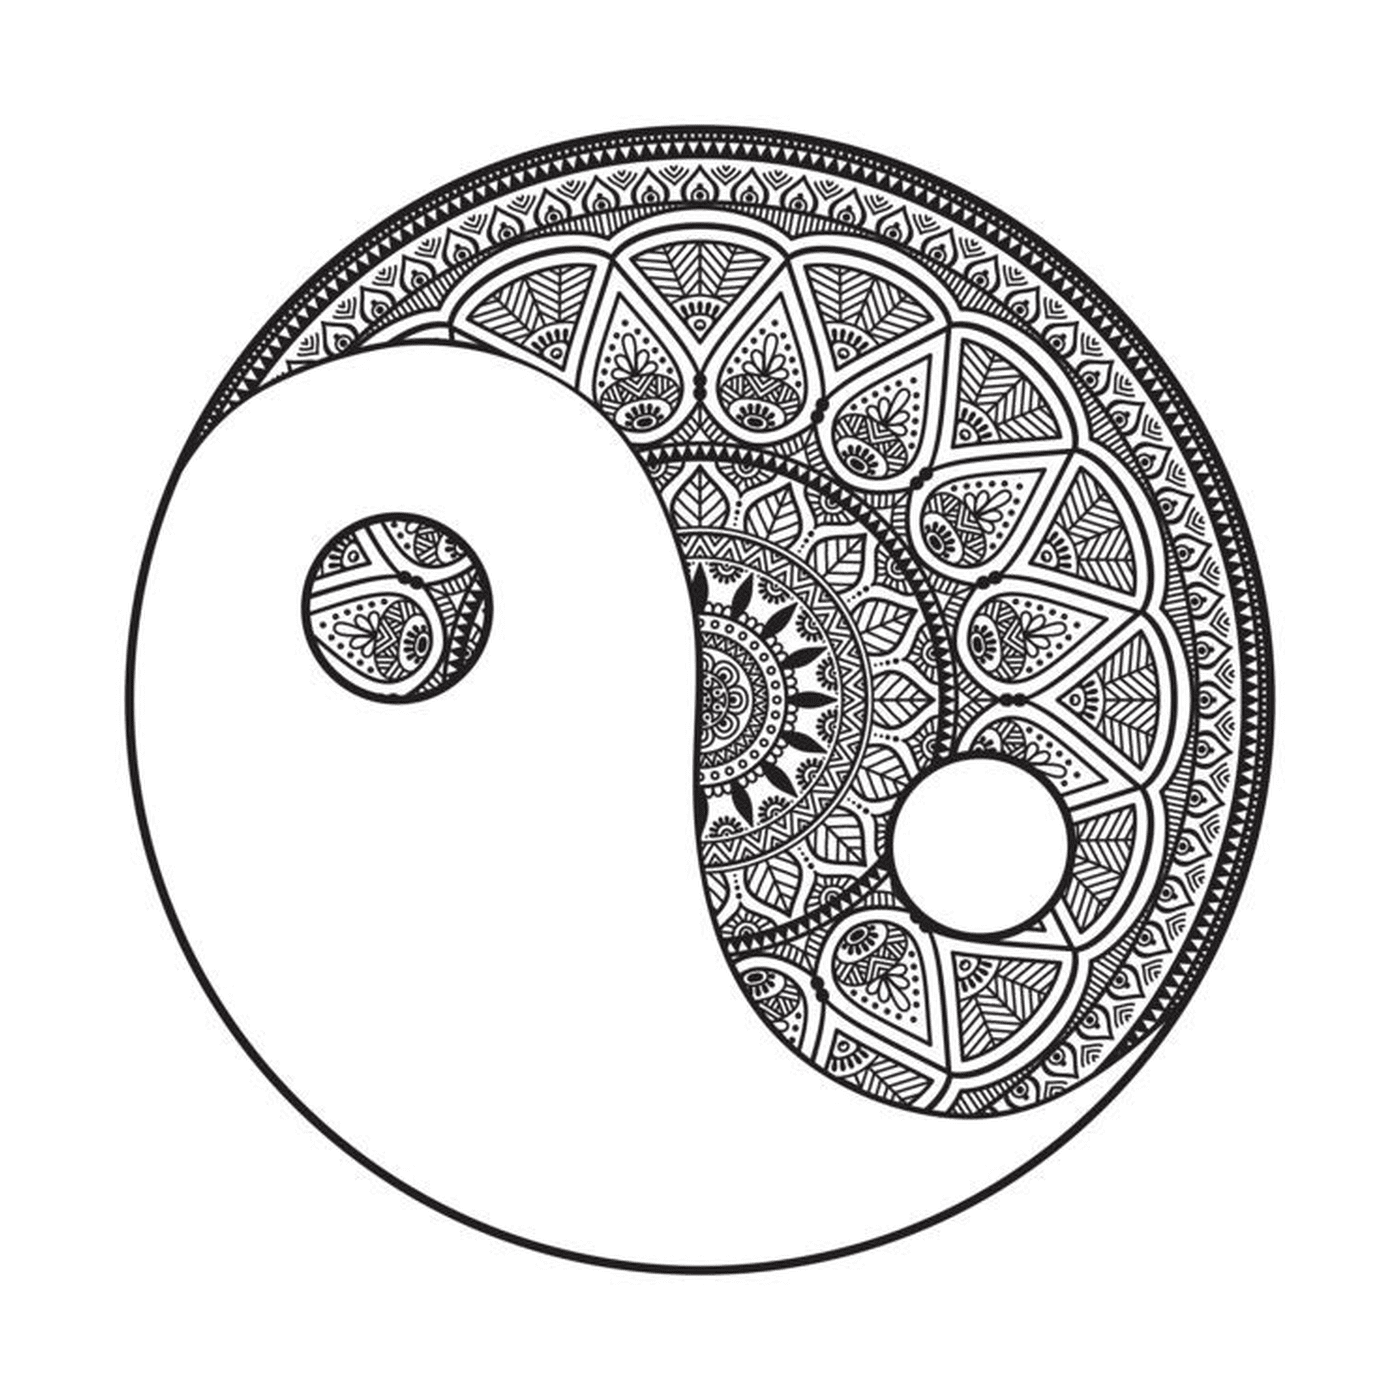  Yin e yang em uma mandala 